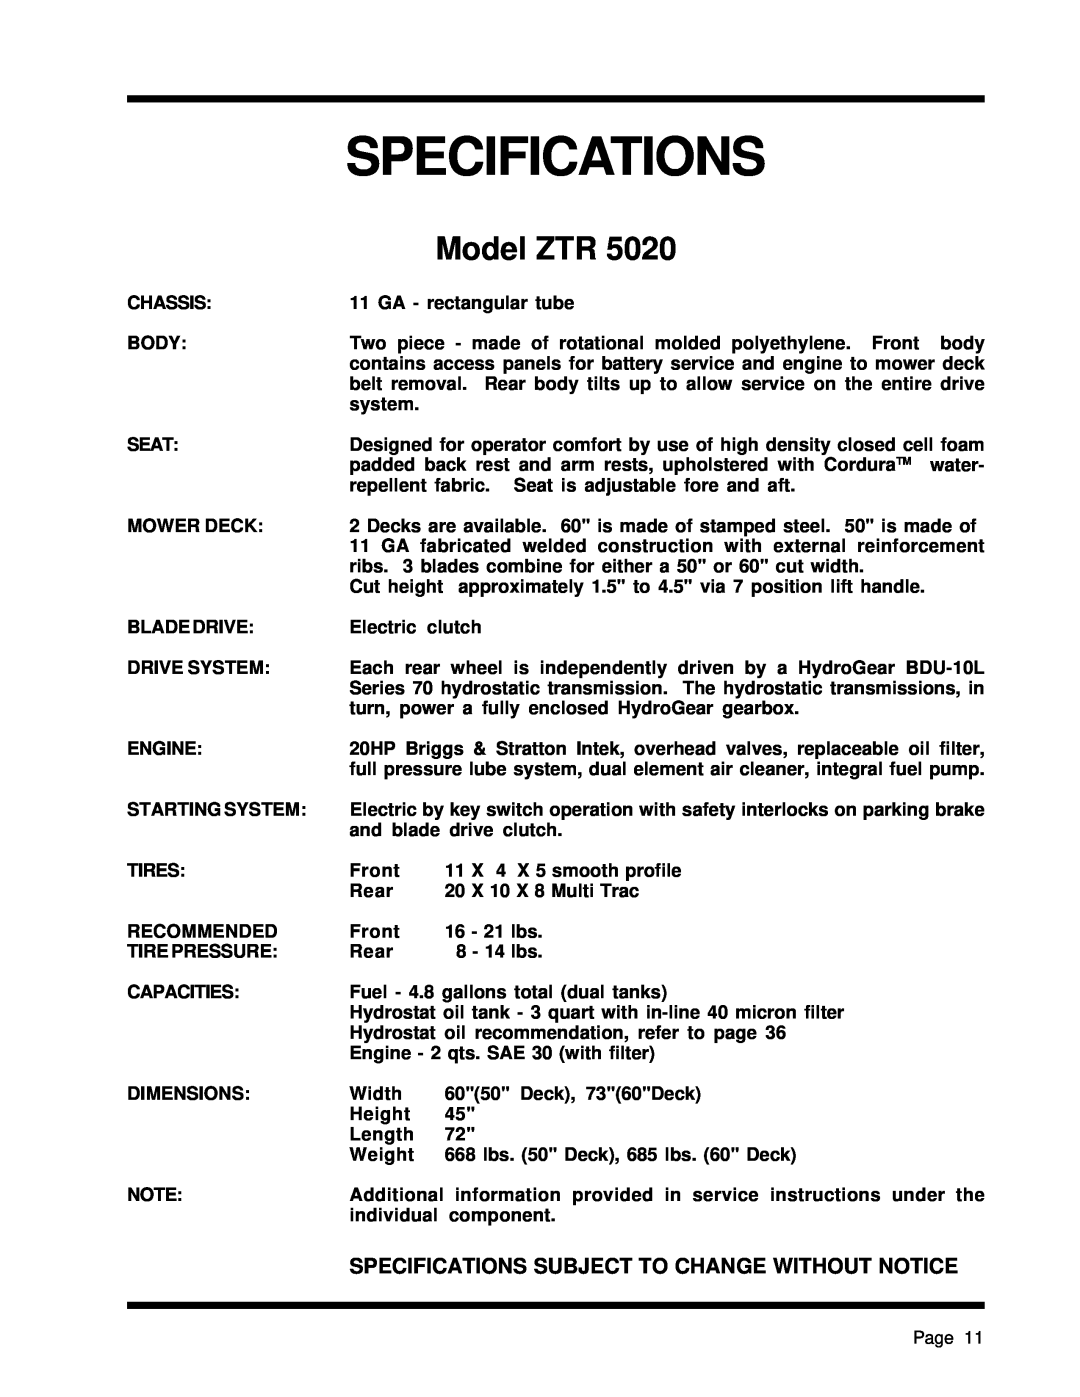 Dixon ZTR 5425, ZTR 5023 manual Specifications, Model ZTR 